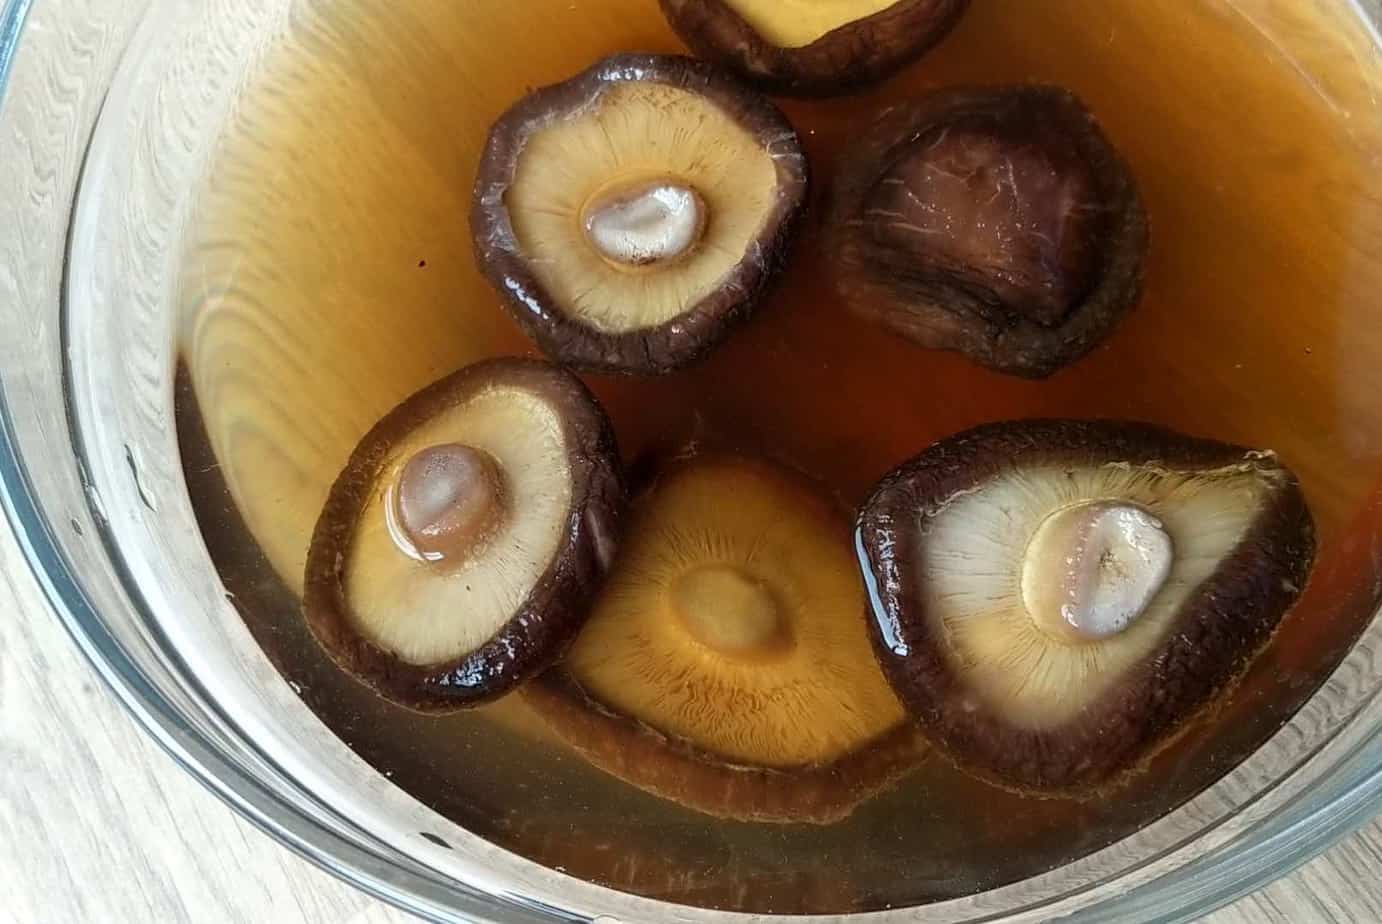 Shiitake mushrooms soaked in water